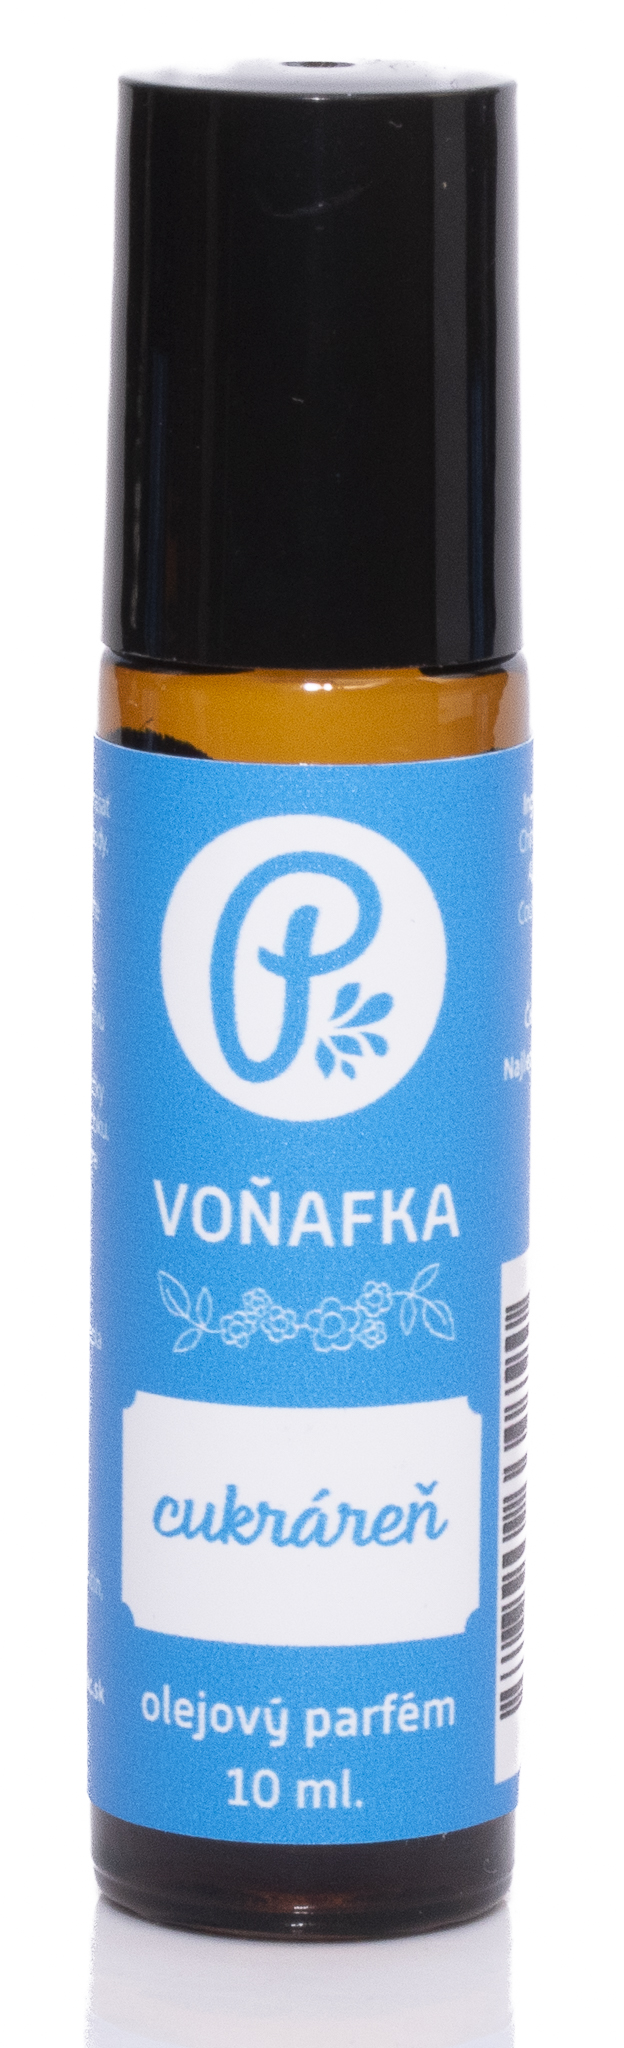 Voňafka - Cukráreň 10ml olejový parfém